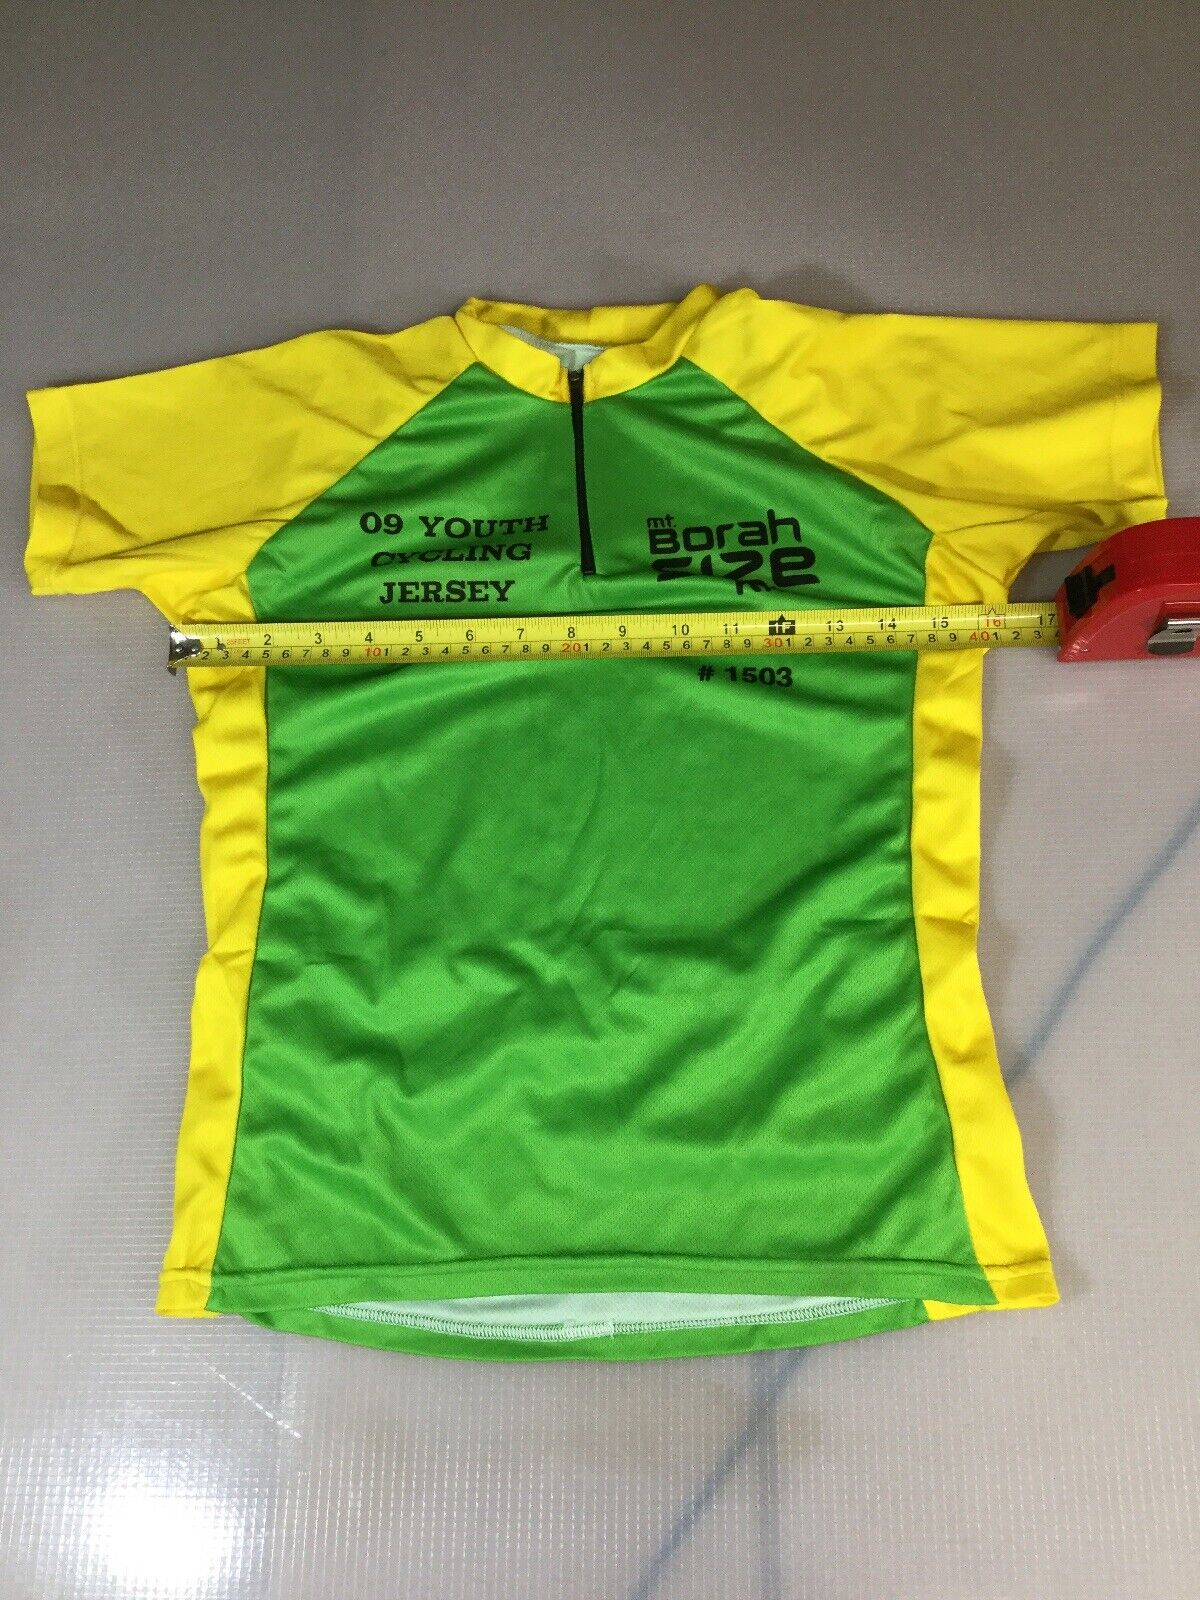 Mt Borah Teamwear Kids Cycling Elegant Finally resale start Youth YL 6910-47 Jersey Large